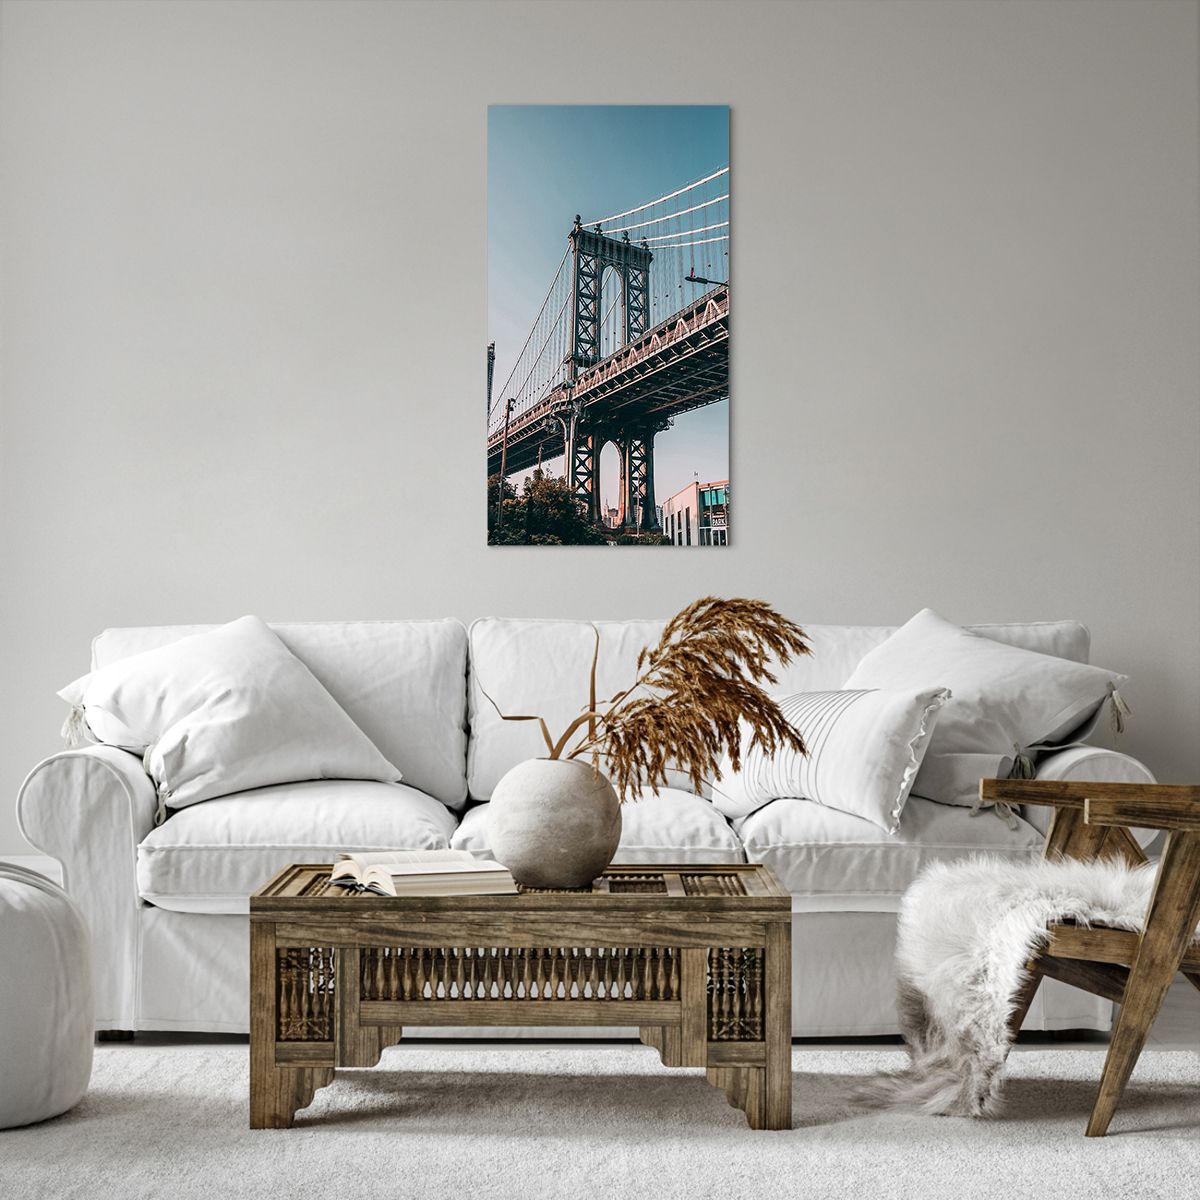 Quadro su tela New York, Quadro su tela Ponte Di Brooklyn, Quadro su tela Architettura, Quadro su tela Città, Quadro su tela Viaggi